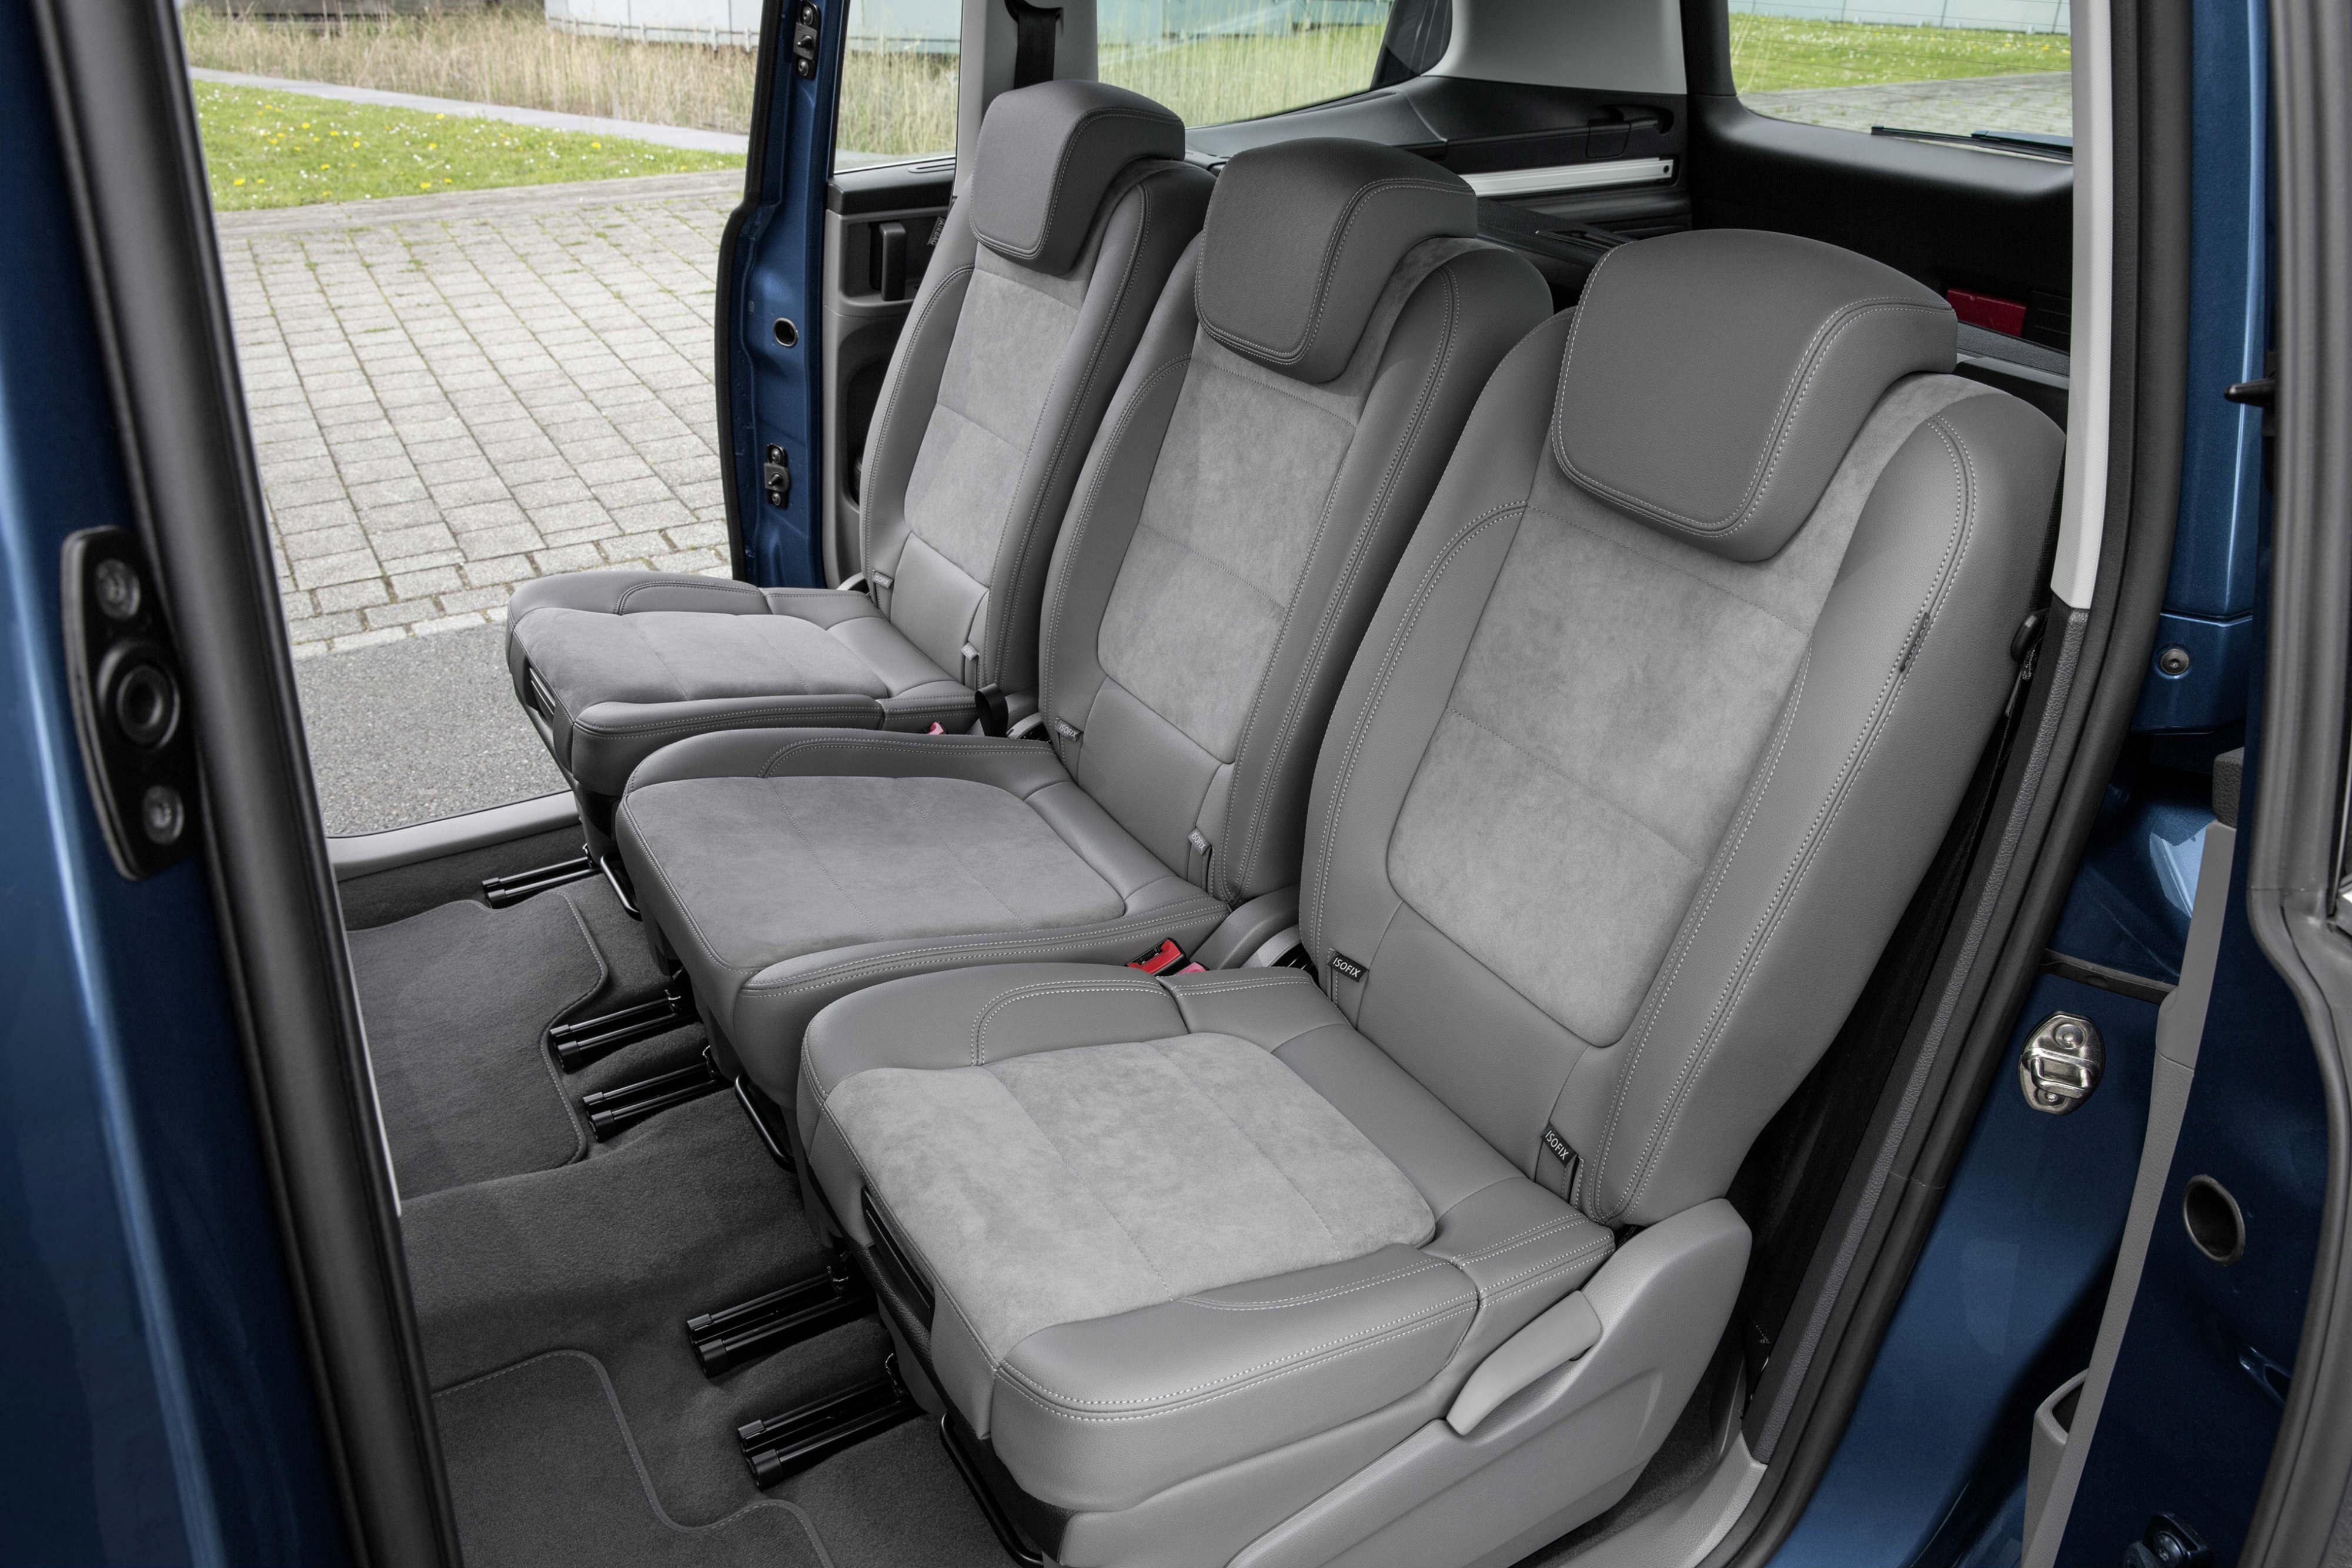 Volkswagen Sharan 2015 back seats; review